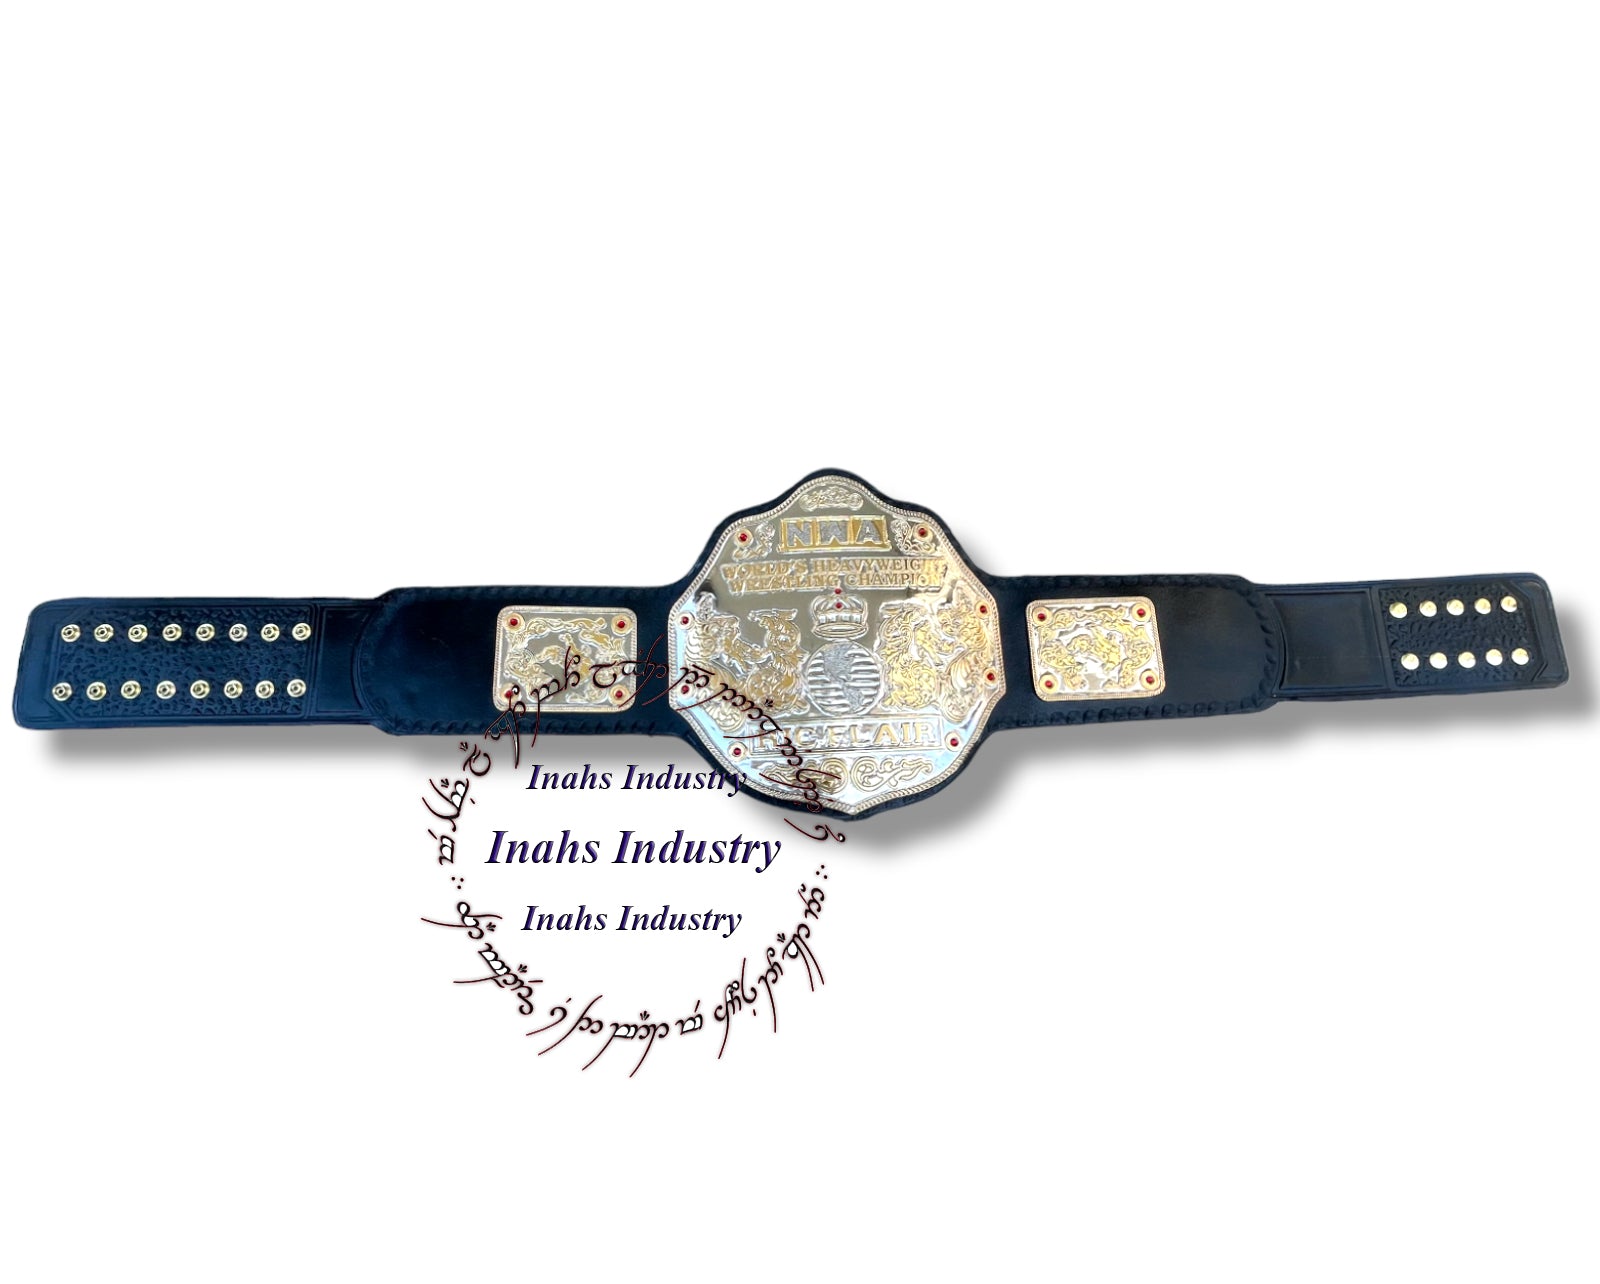 NWA Big Gold Ric Flair World Heavyweight Wrestling Championship Belt